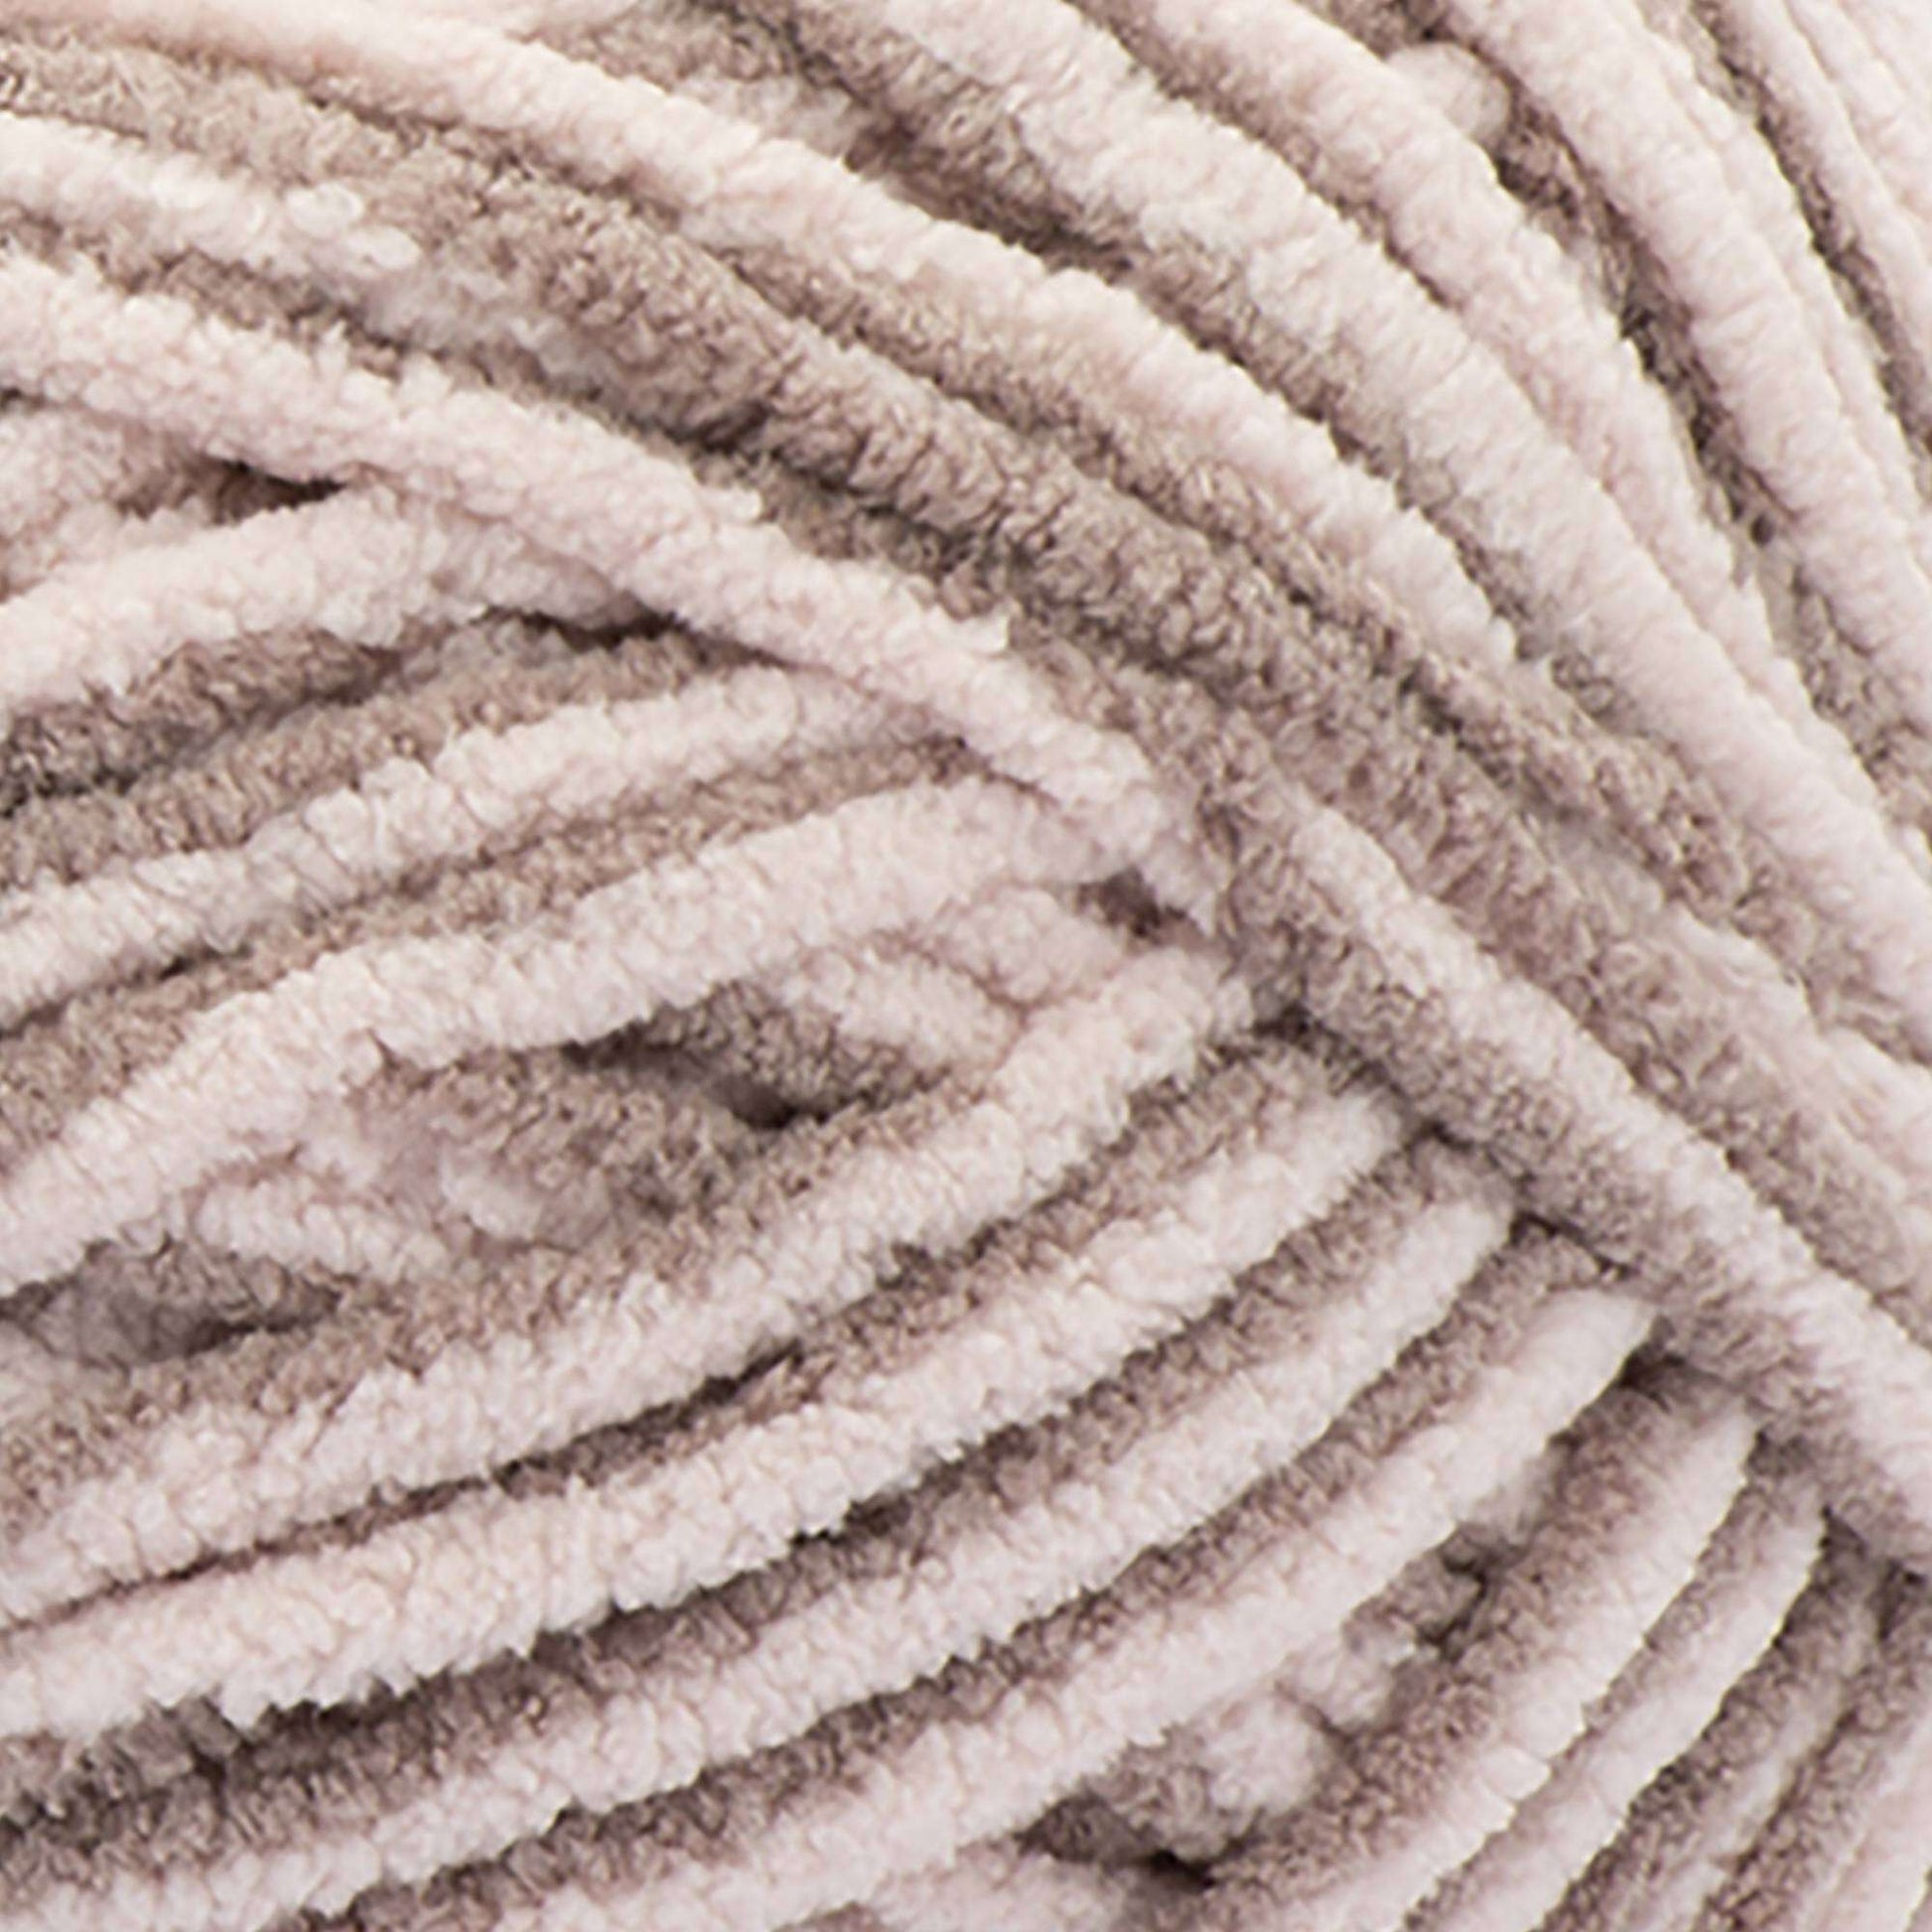 Bernat Blanket Double Take Yarn - Discontinued